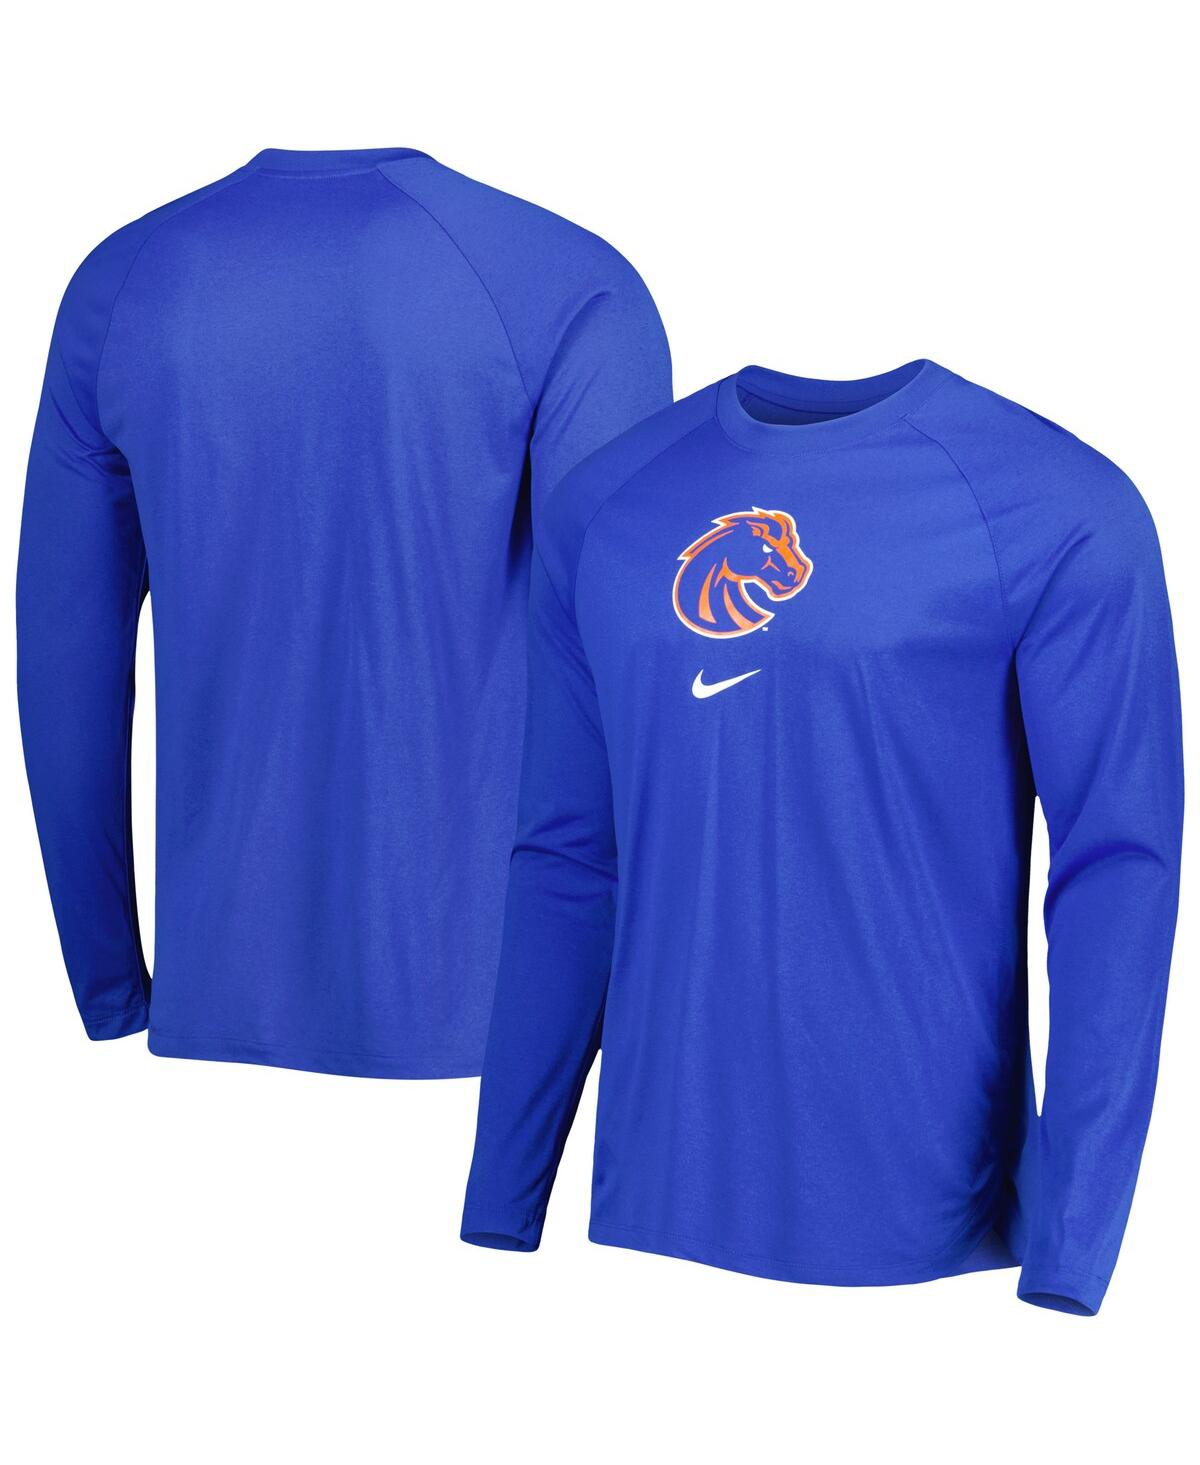 Shop Nike Men's  Royal Boise State Broncos Spotlight Raglan Performance Long Sleeve T-shirt